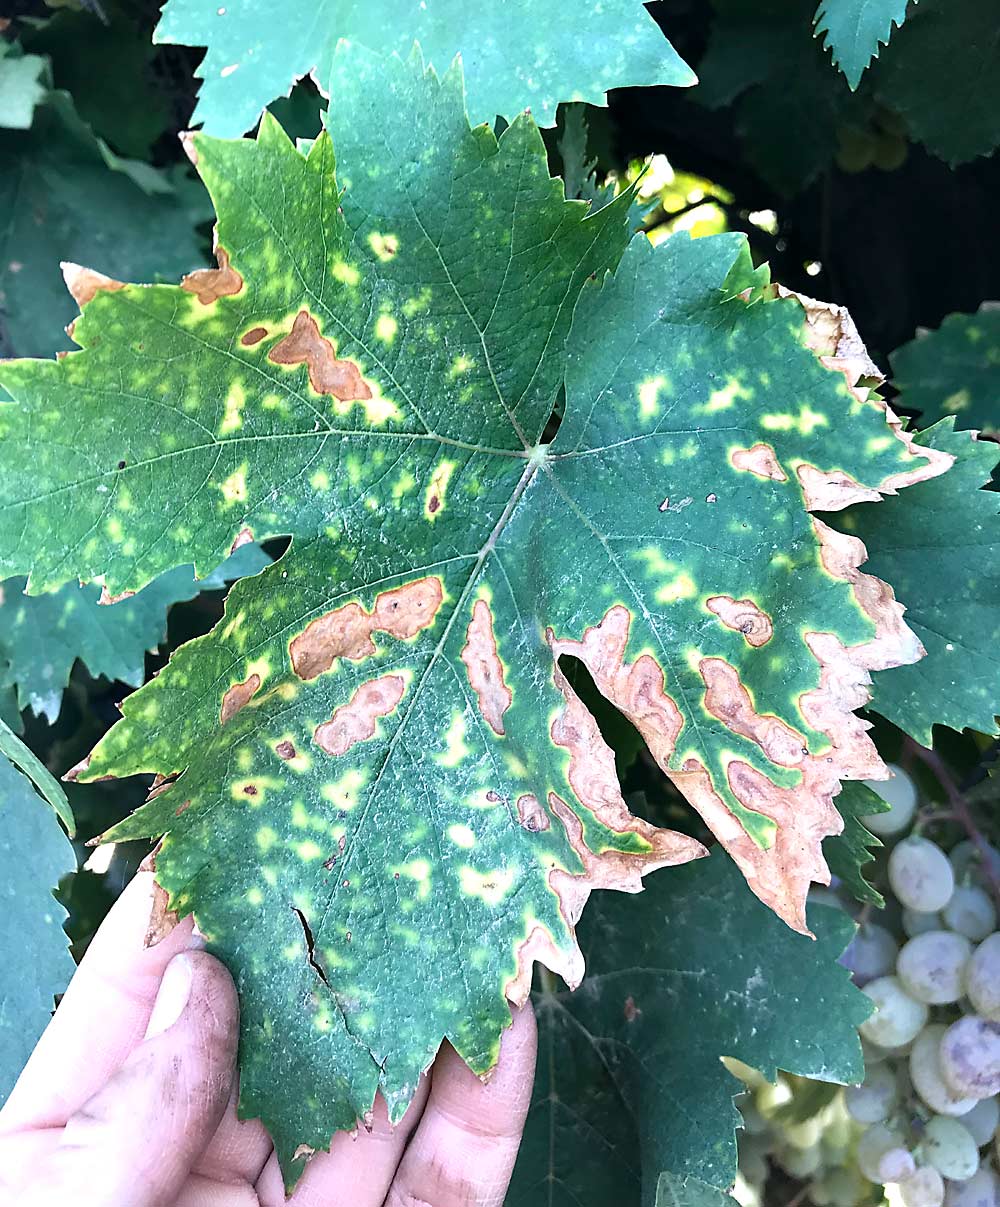 Leaf symptoms indicate an esca infection, a common trunk disease also known as grapevine measles. Recent surveys of Washington vineyards for trunk diseases found significant esca infections, according to Baumgartner. (Courtesy Kendra Baumgartner)